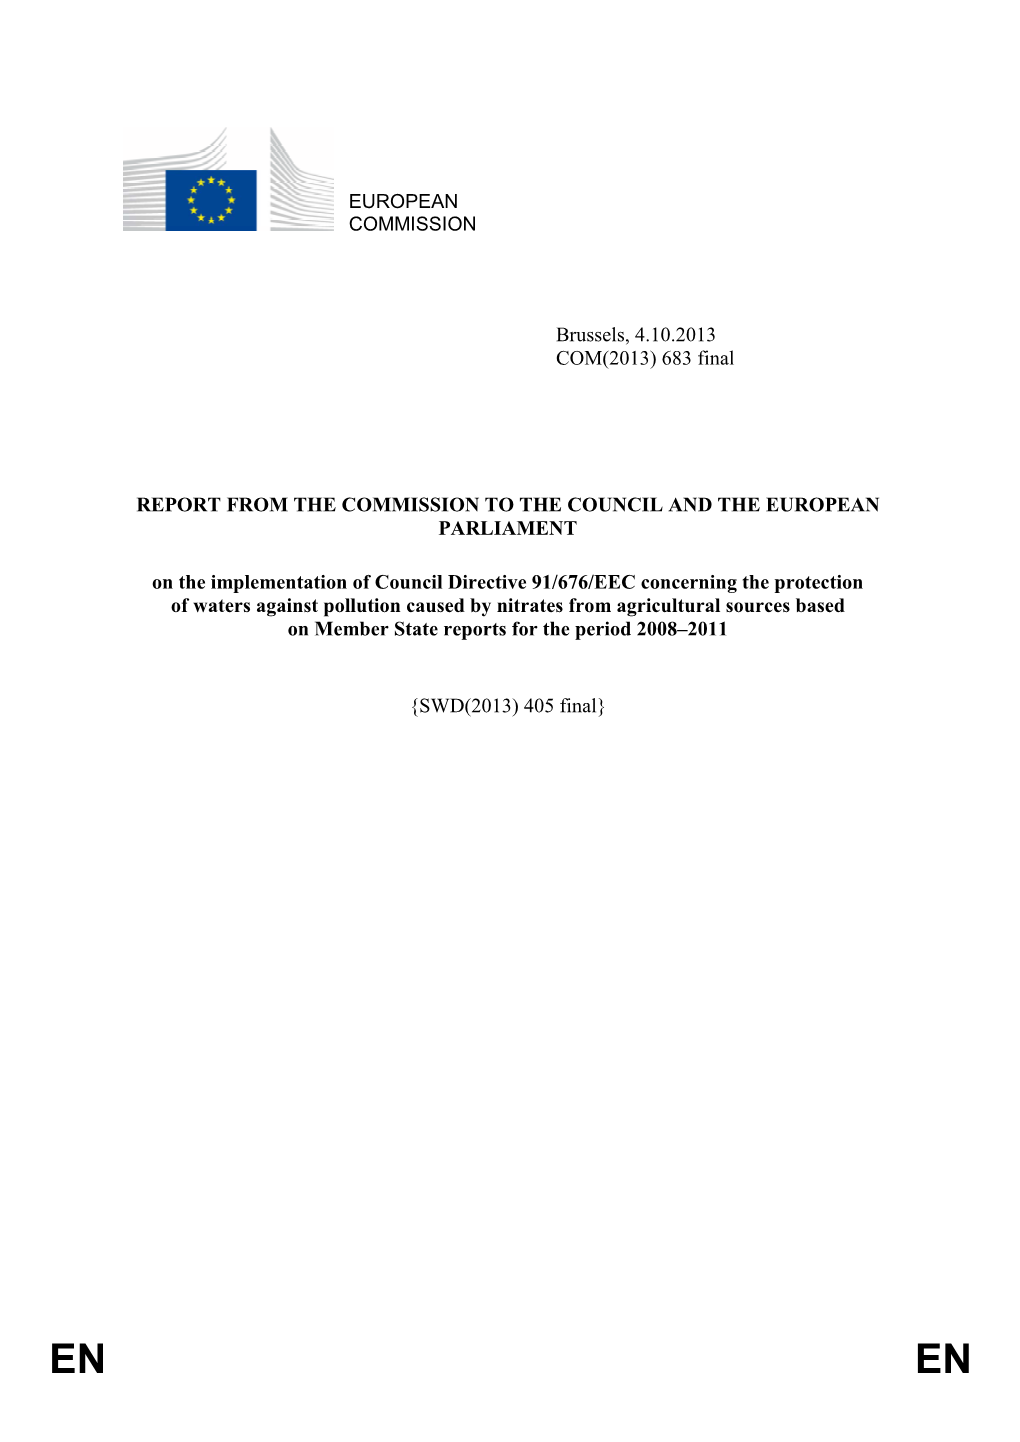 EUROPEAN COMMISSION Brussels, 4.10.2013 COM(2013)